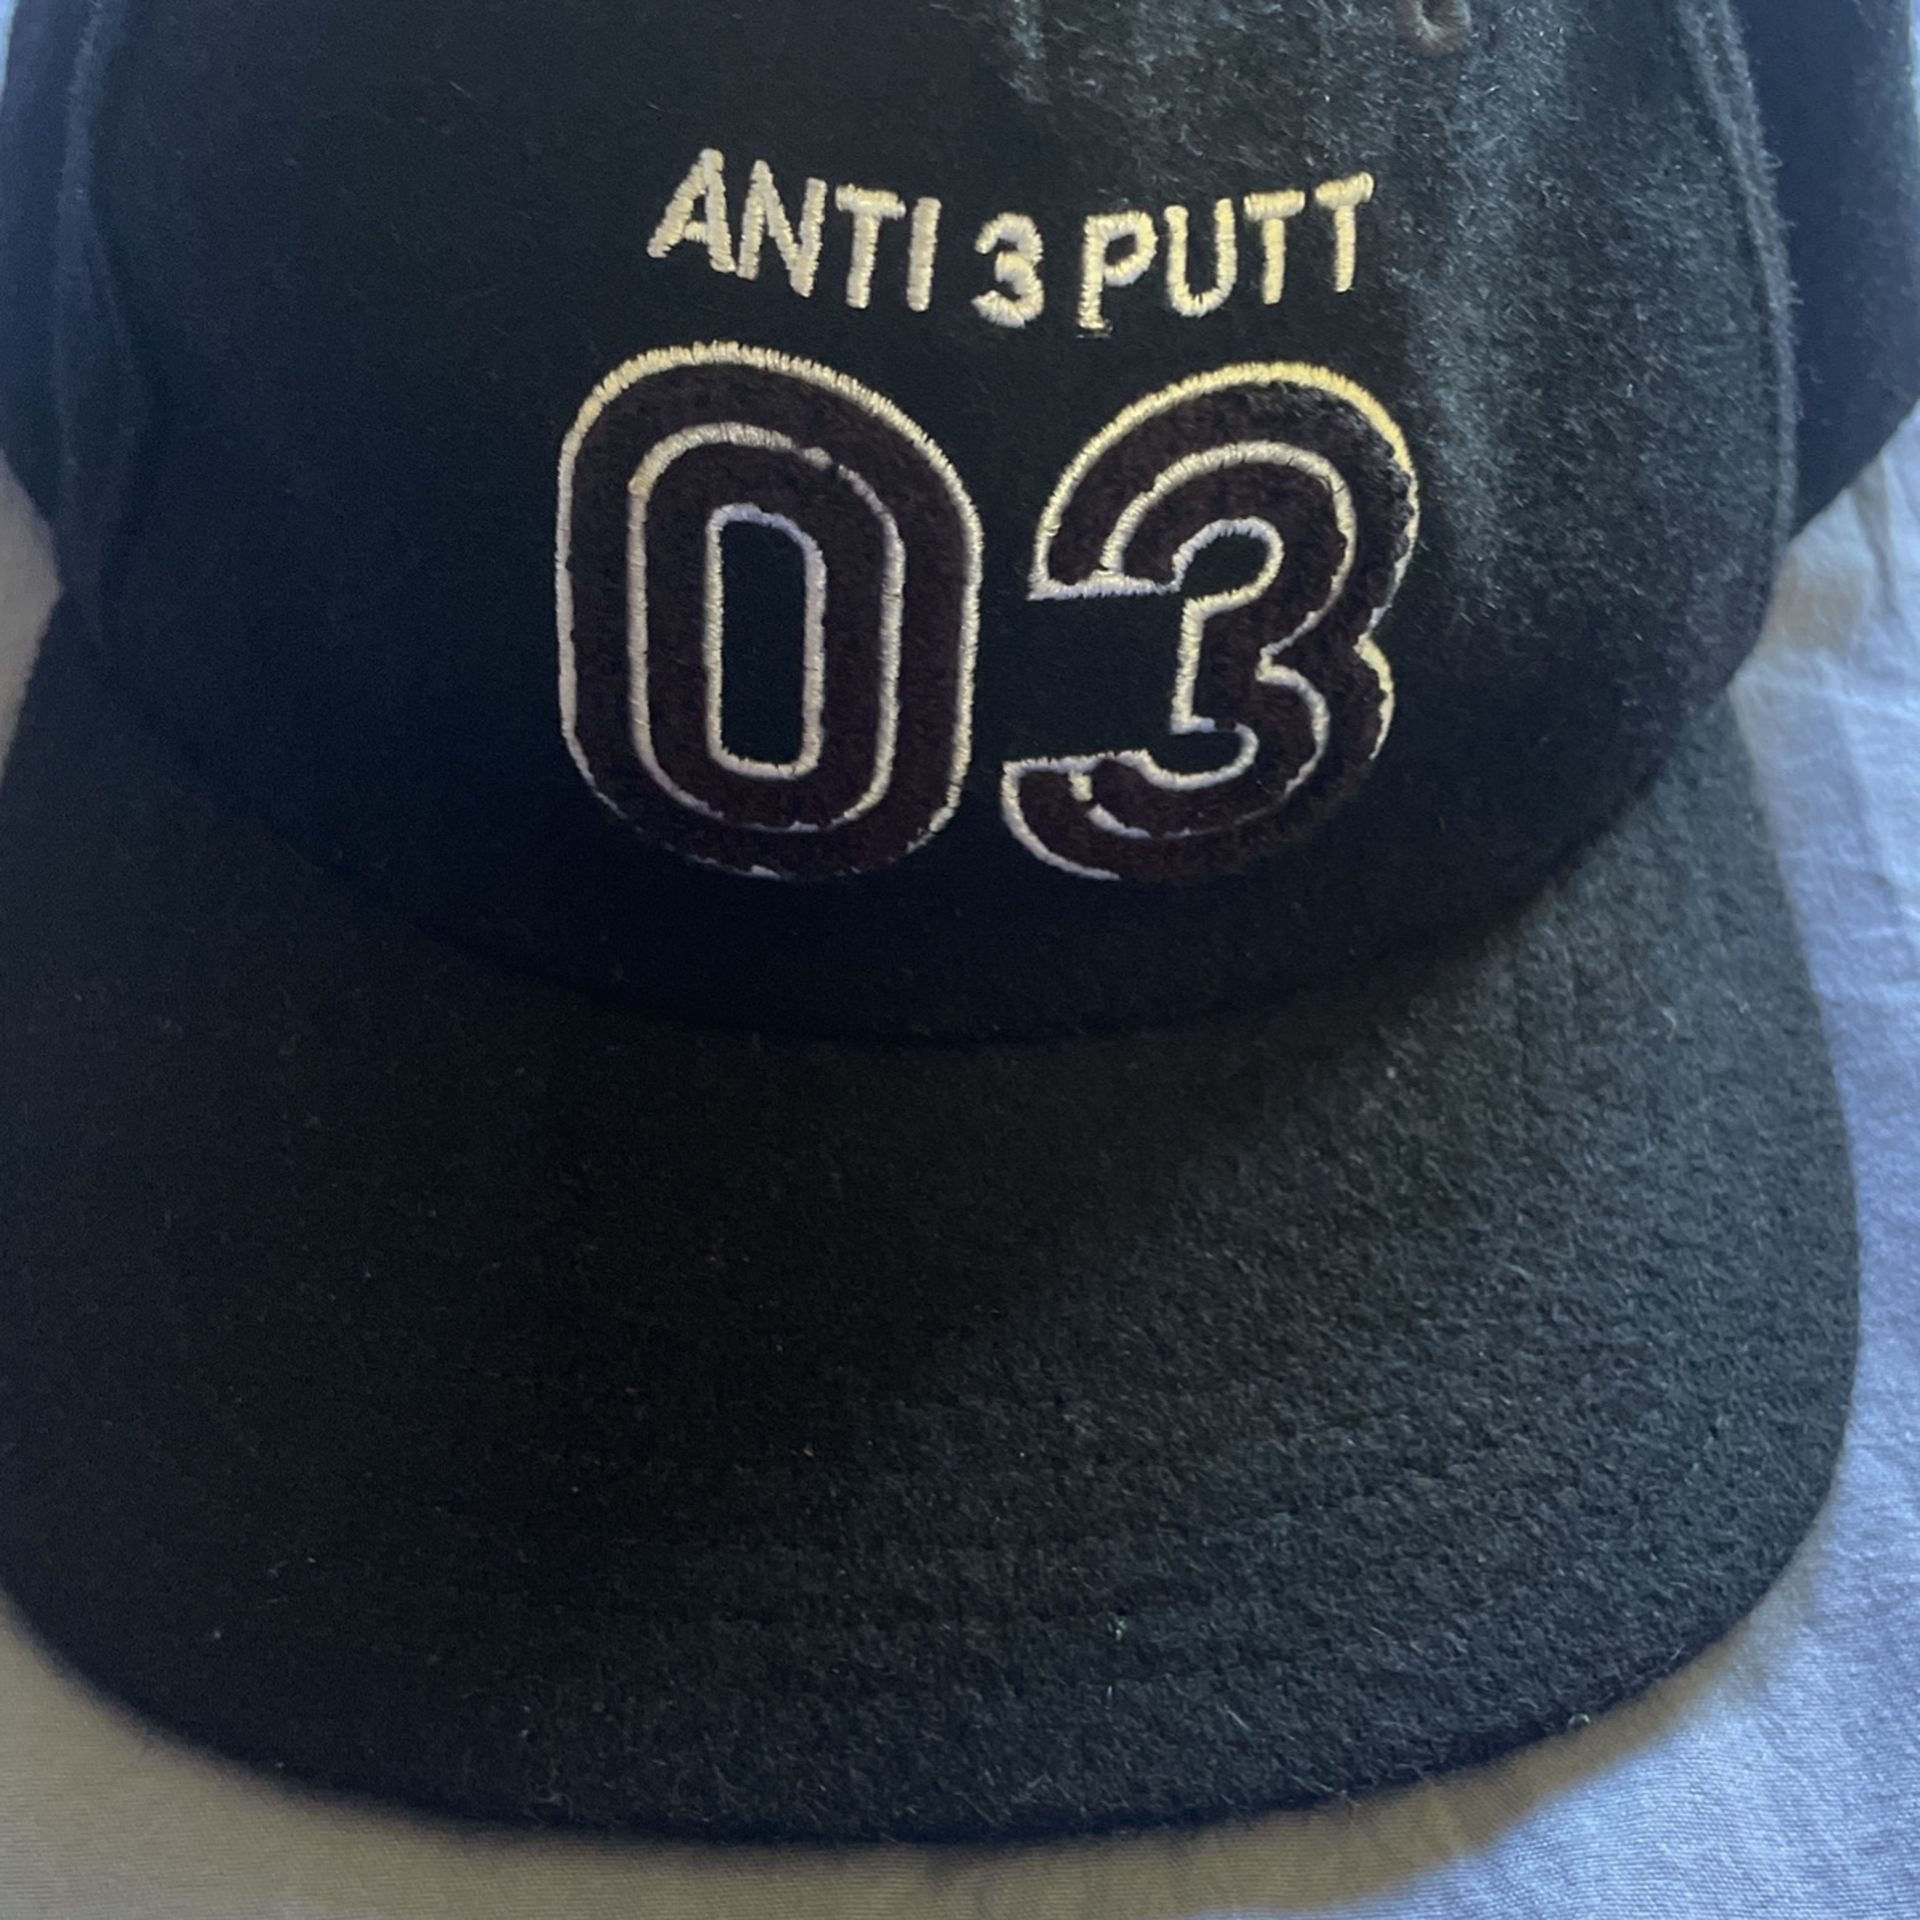 Adidas Hat 03 Antiputt